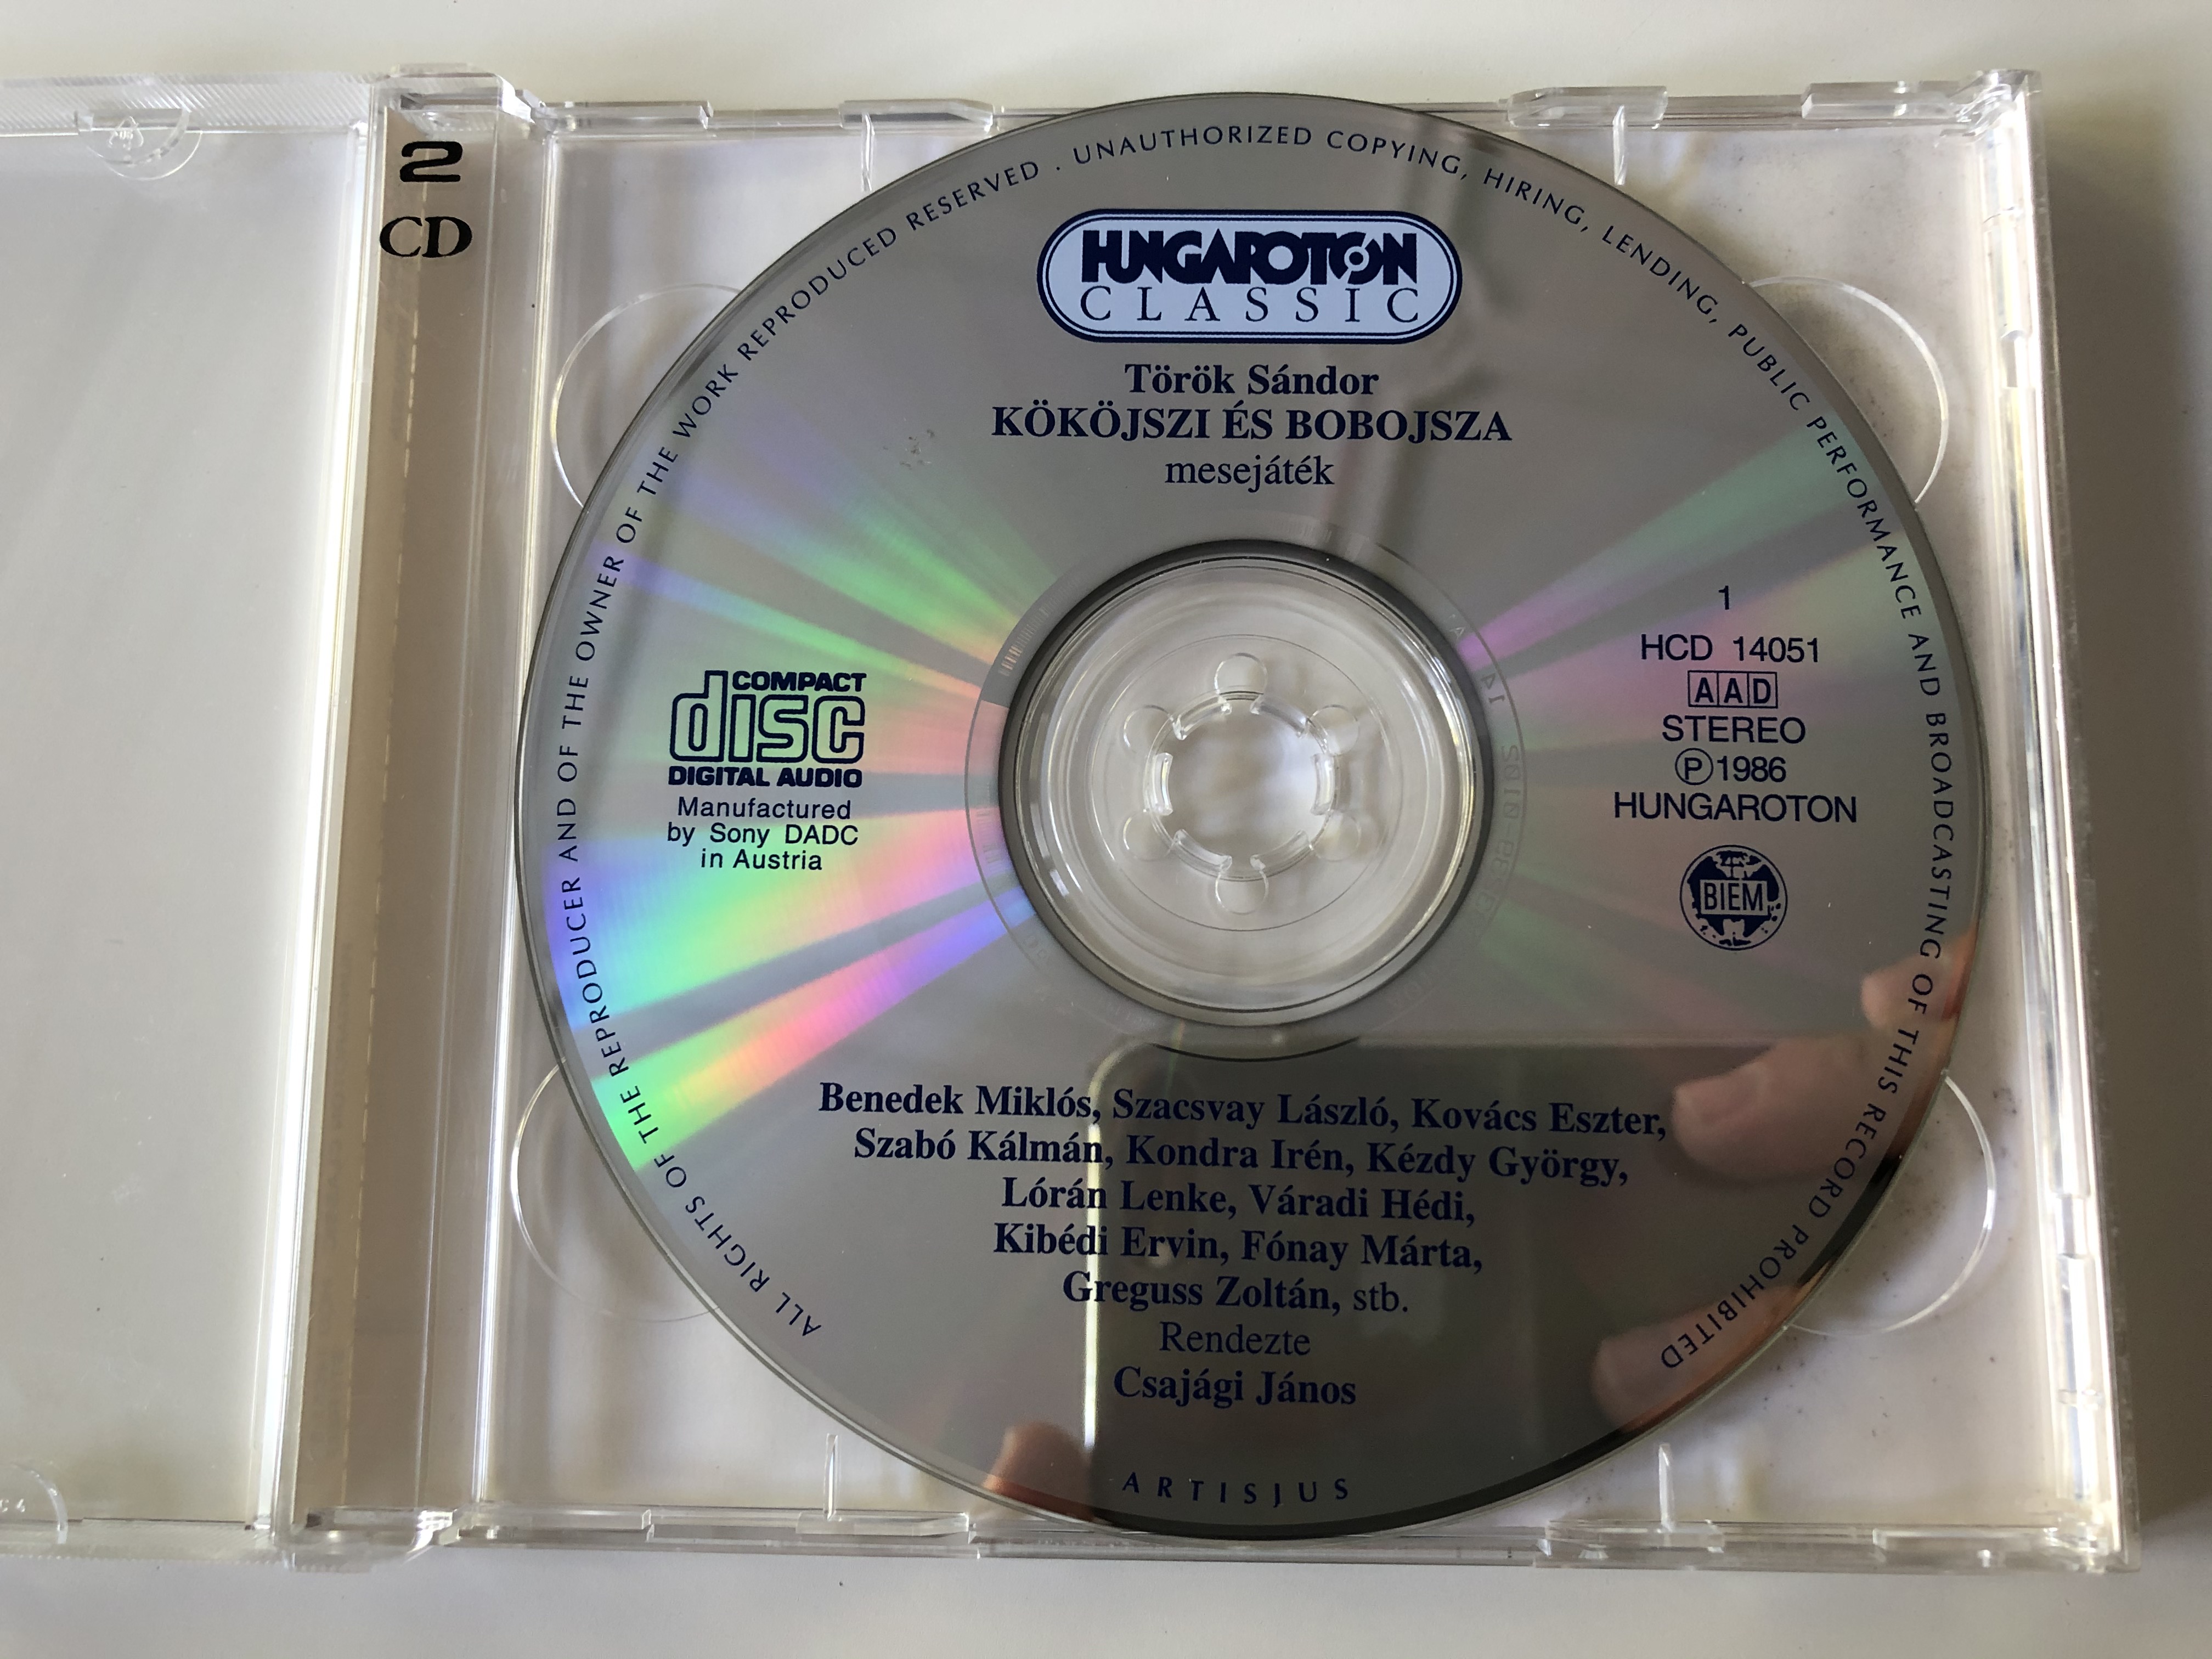 t-r-k-sandor-k-k-jszi-s-bobojsza-hungaroton-classic-2x-audio-cd-1999-stereo-hcd-14051-52-1-.jpg